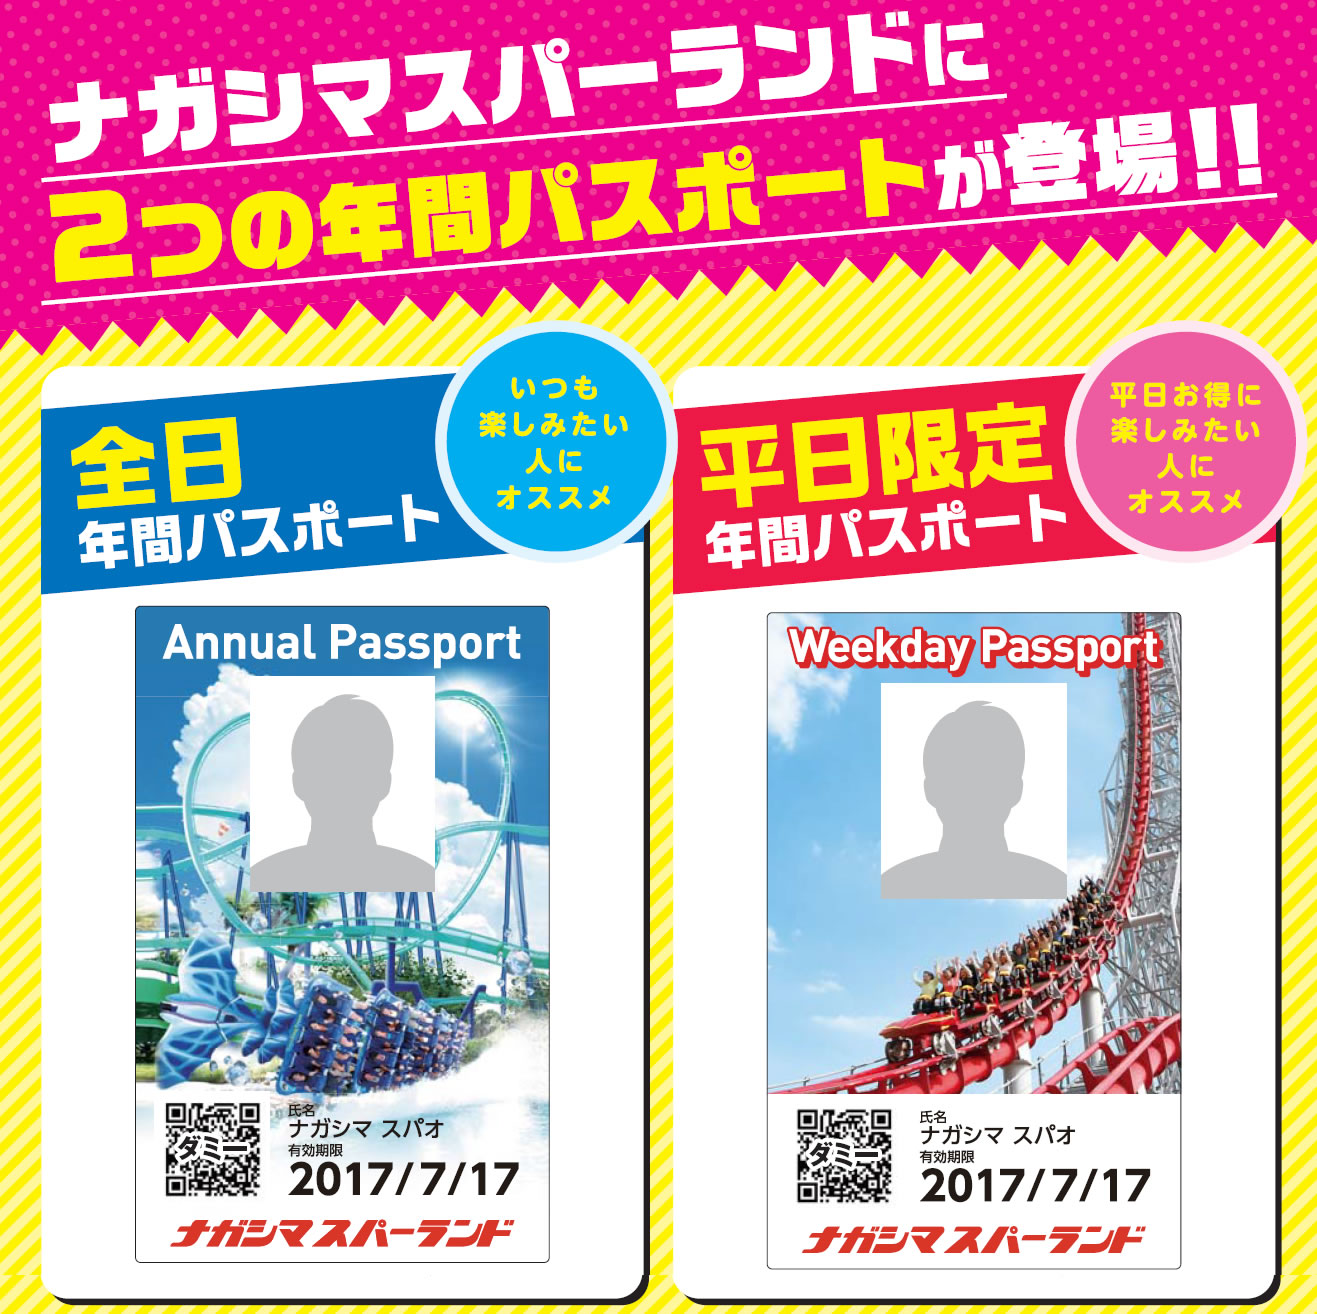 Annual Passport ナガシマスパーランド